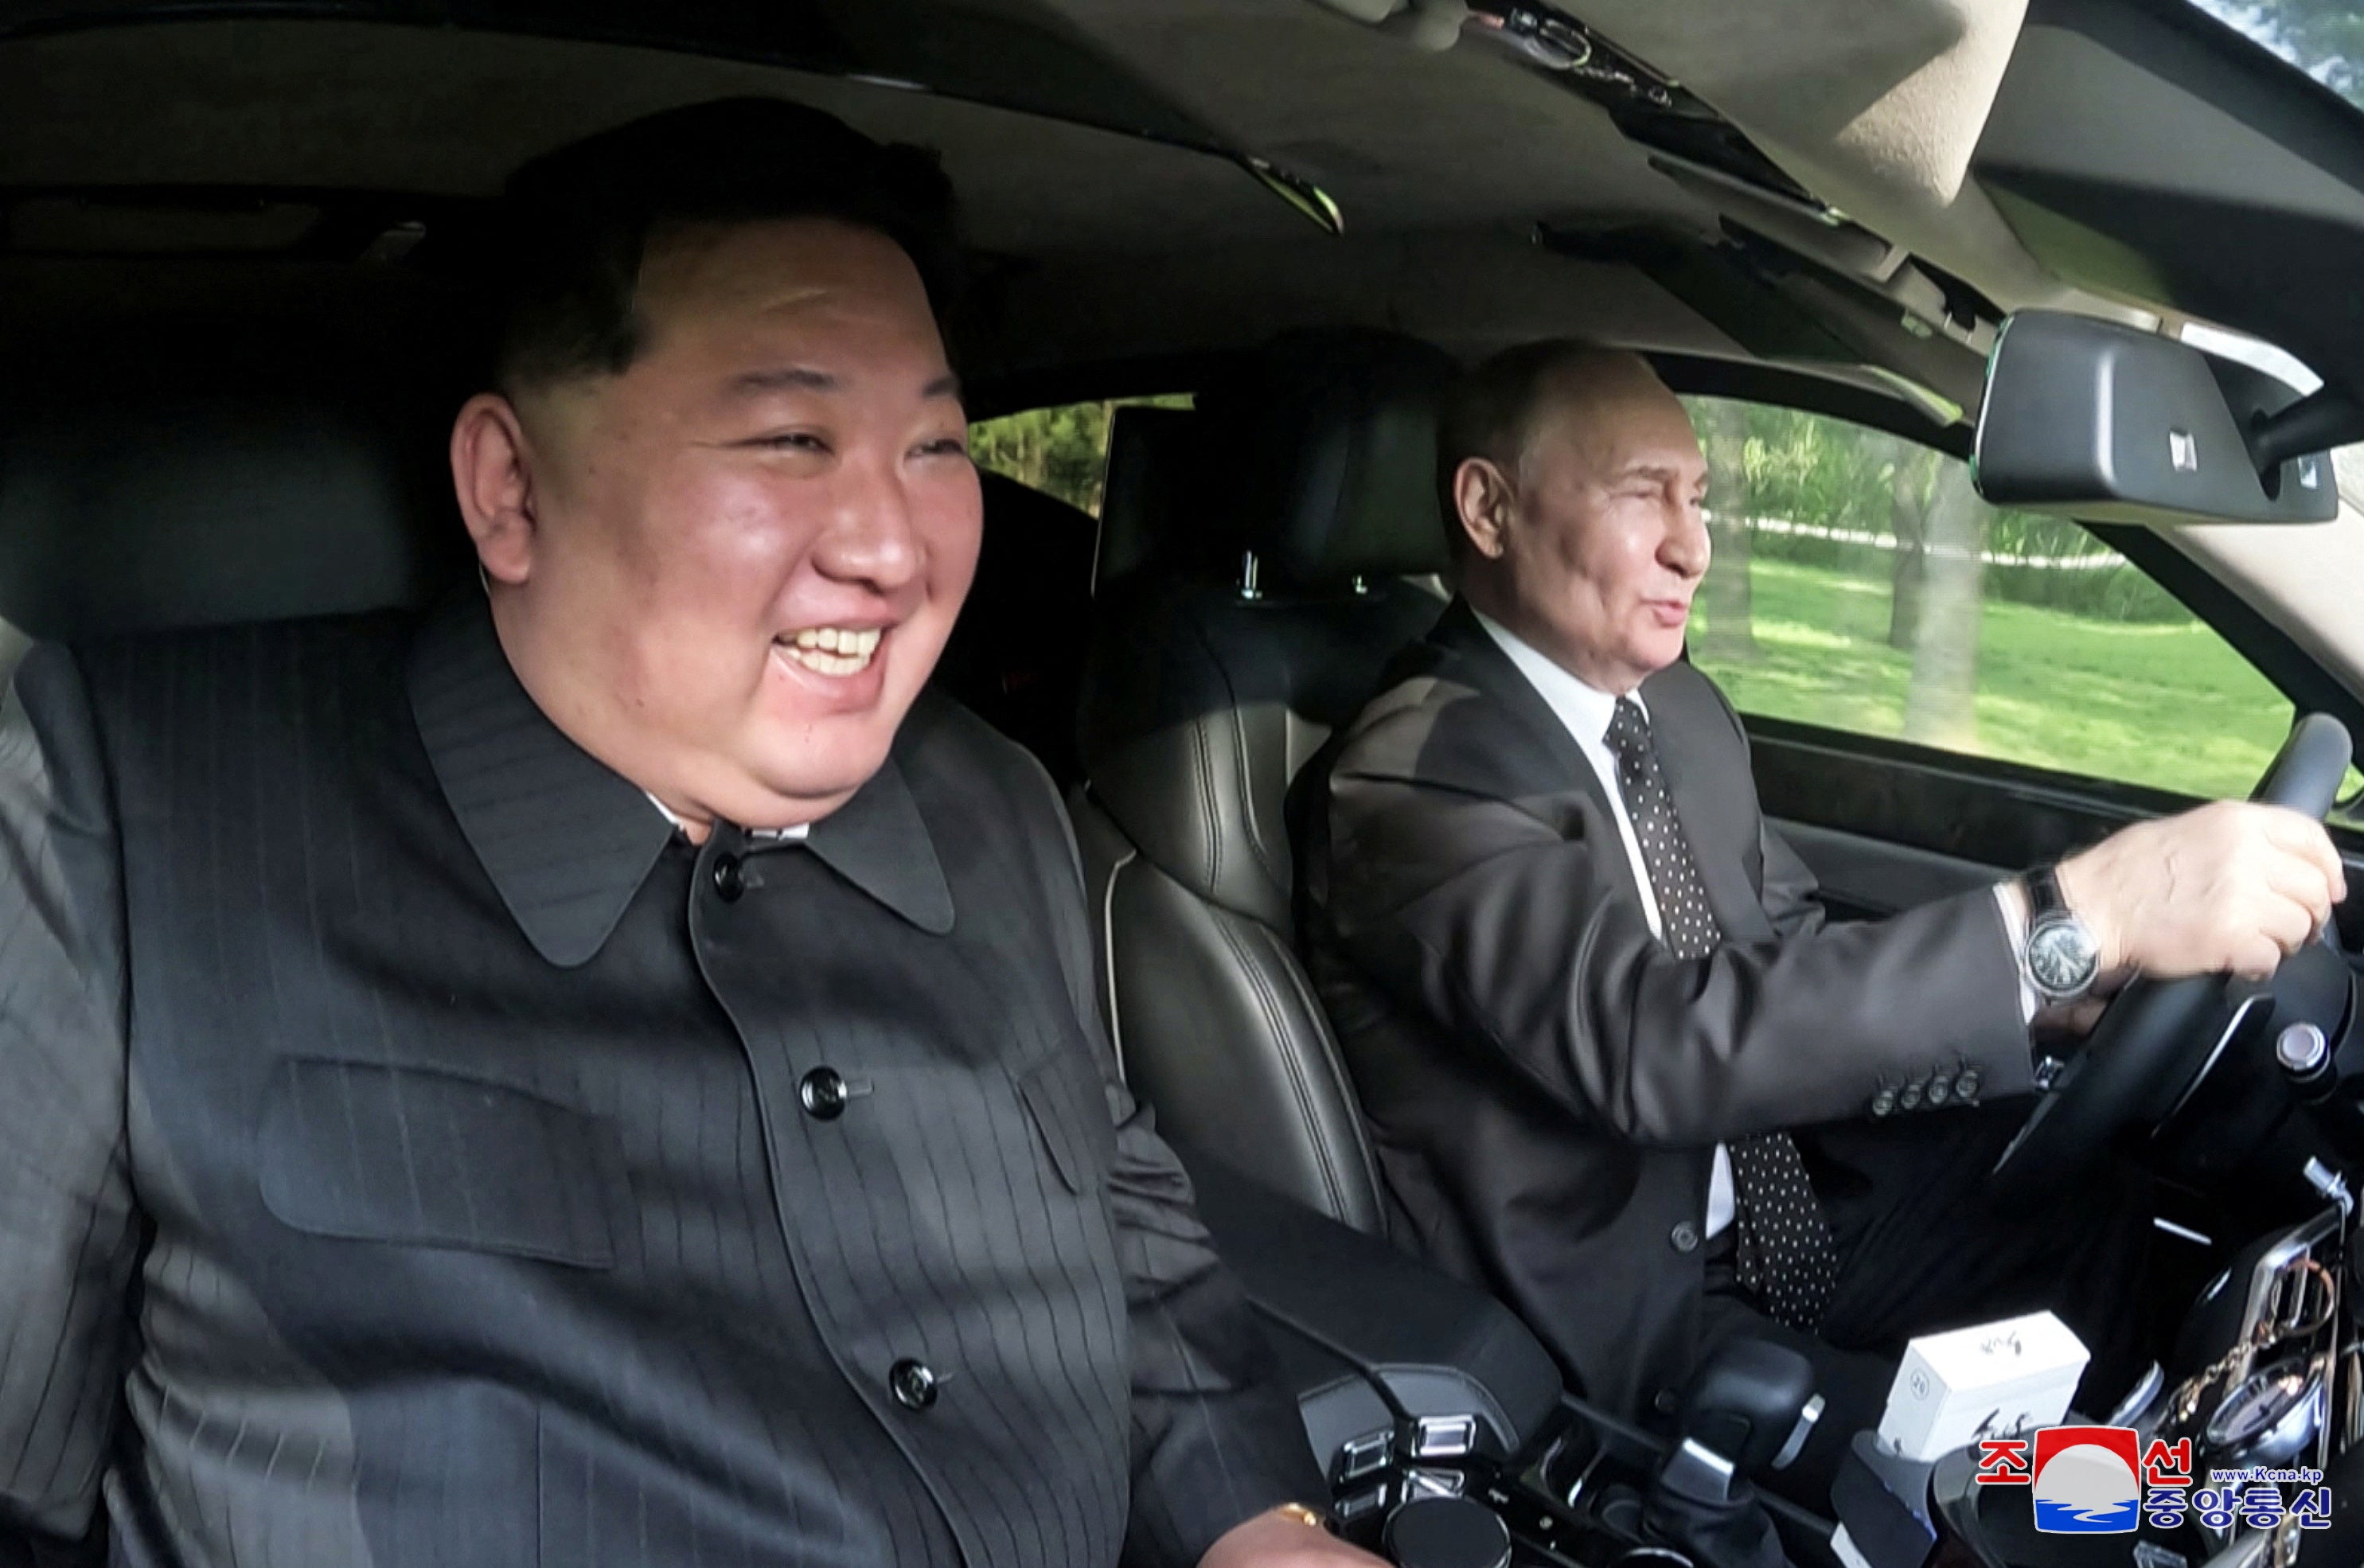 Russian president Vladimir Putin and North Korea’s leader Kim Jong-un drive an Aurus car in Pyongyang